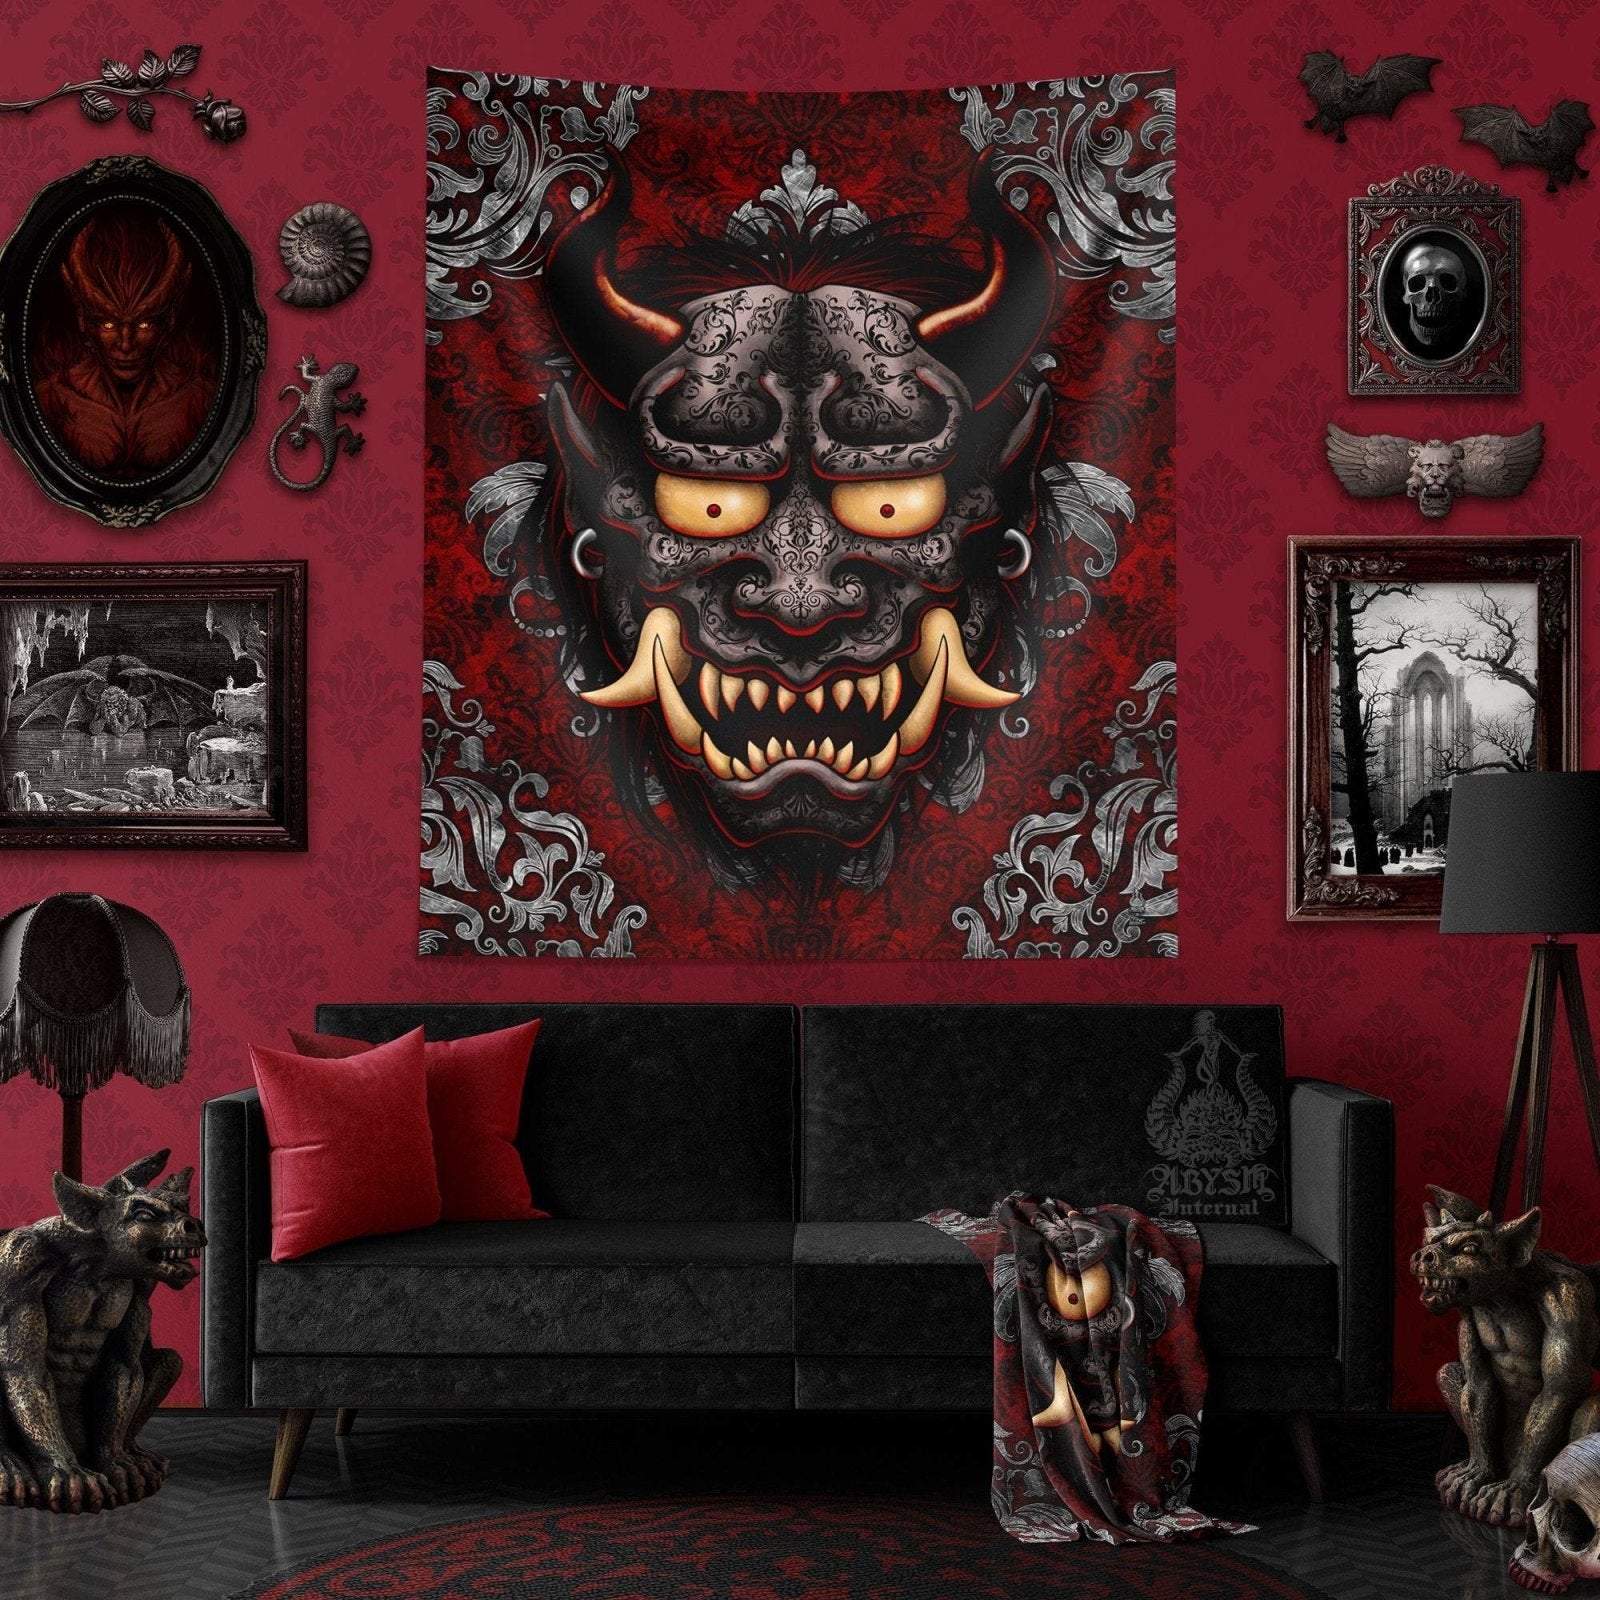 Gothic Tapestry, Oni Wall Hanging, Japanese Demon, Gamer Home Decor, Art Print - Goth Gargoyle - Abysm Internal